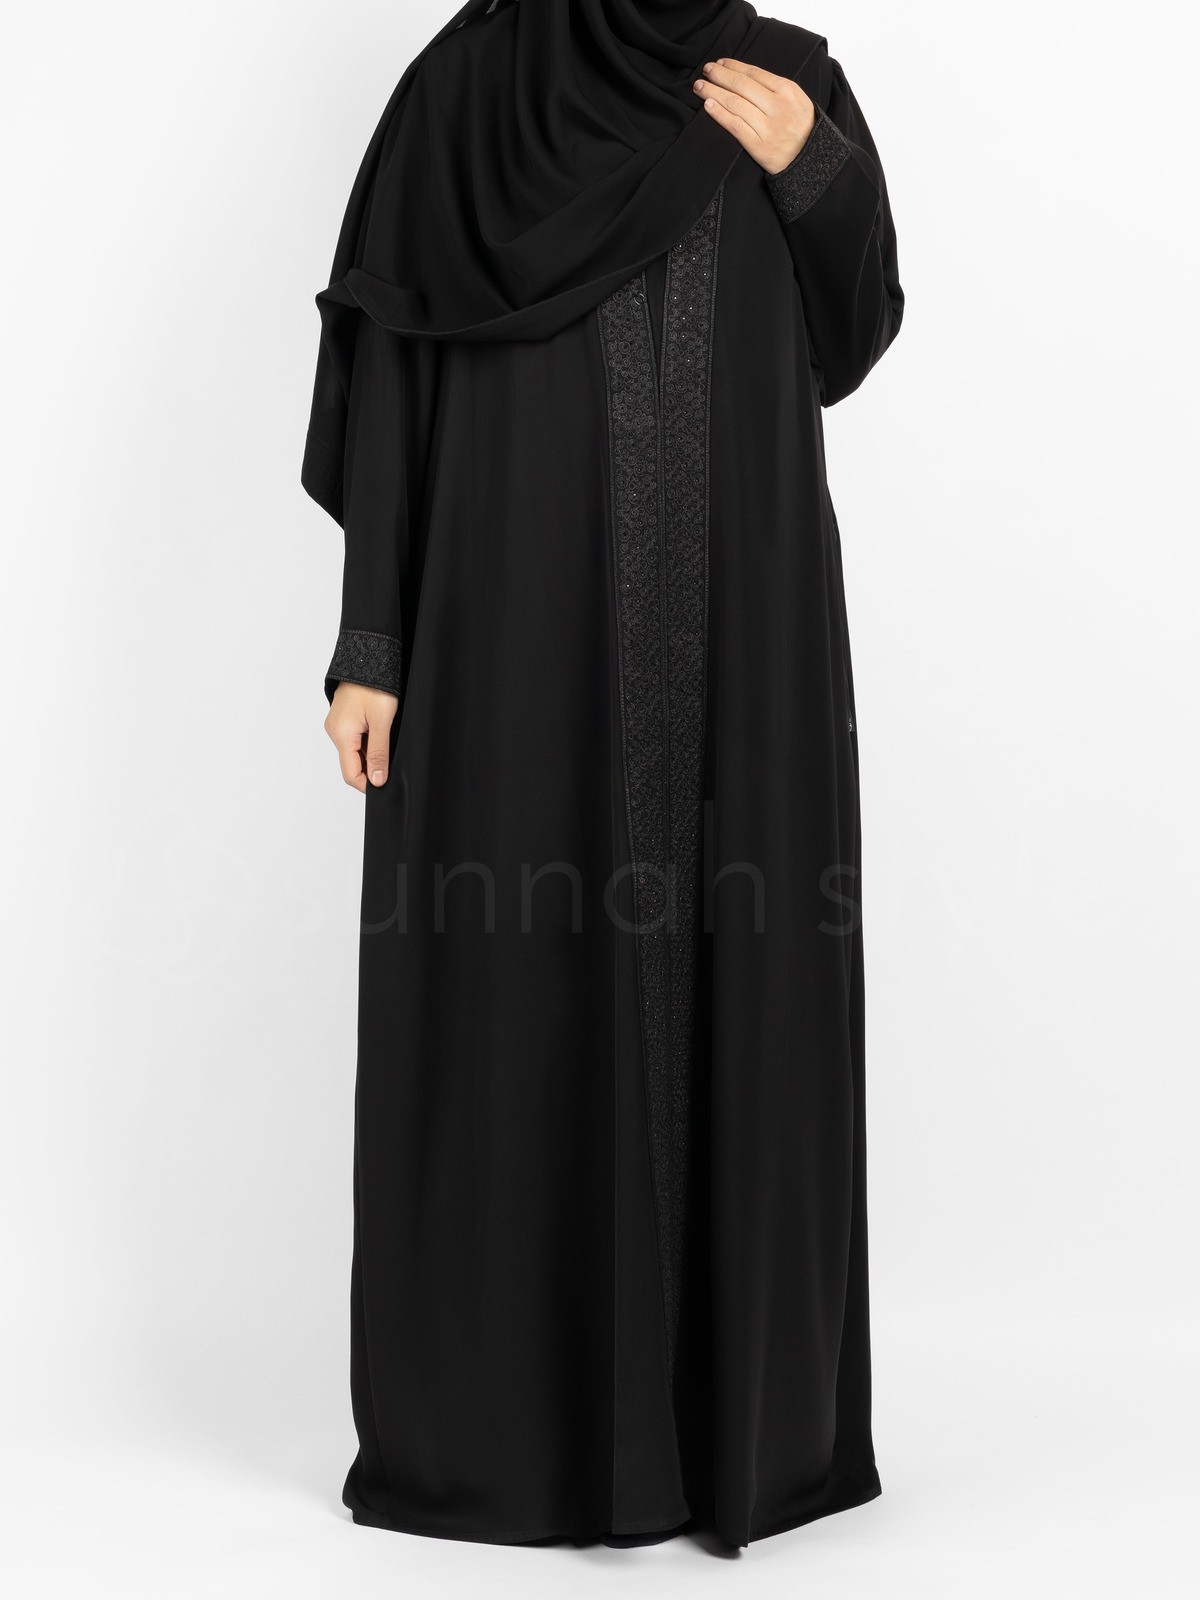 Sunnah Style - Glimmer Abaya (Black)